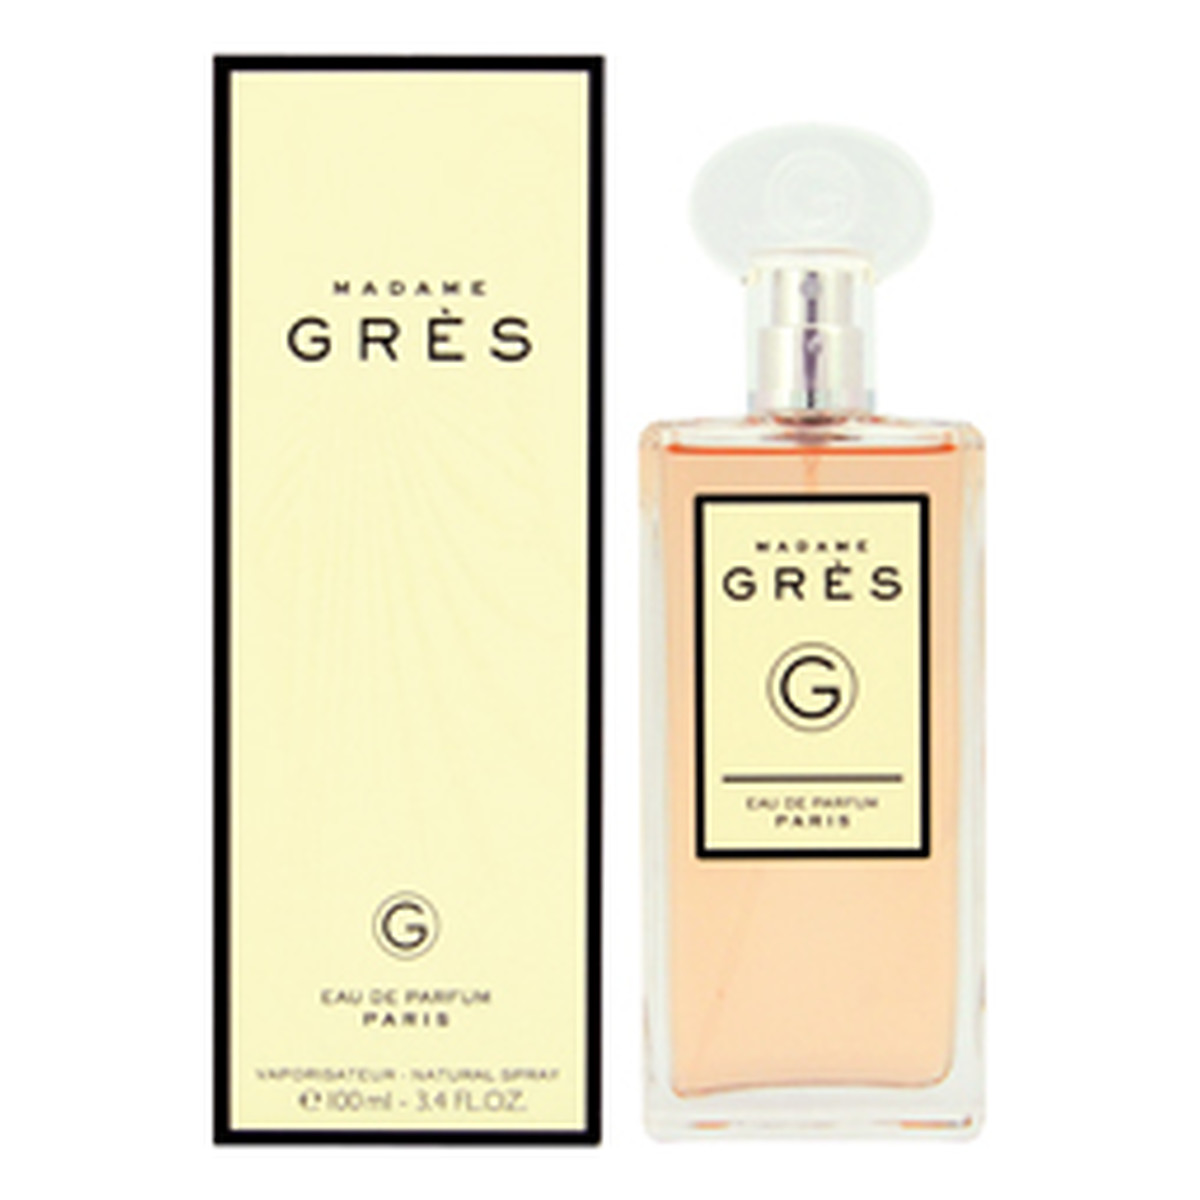 Gres Madame GRES perfumy damskie - woda perfumowana 100ml